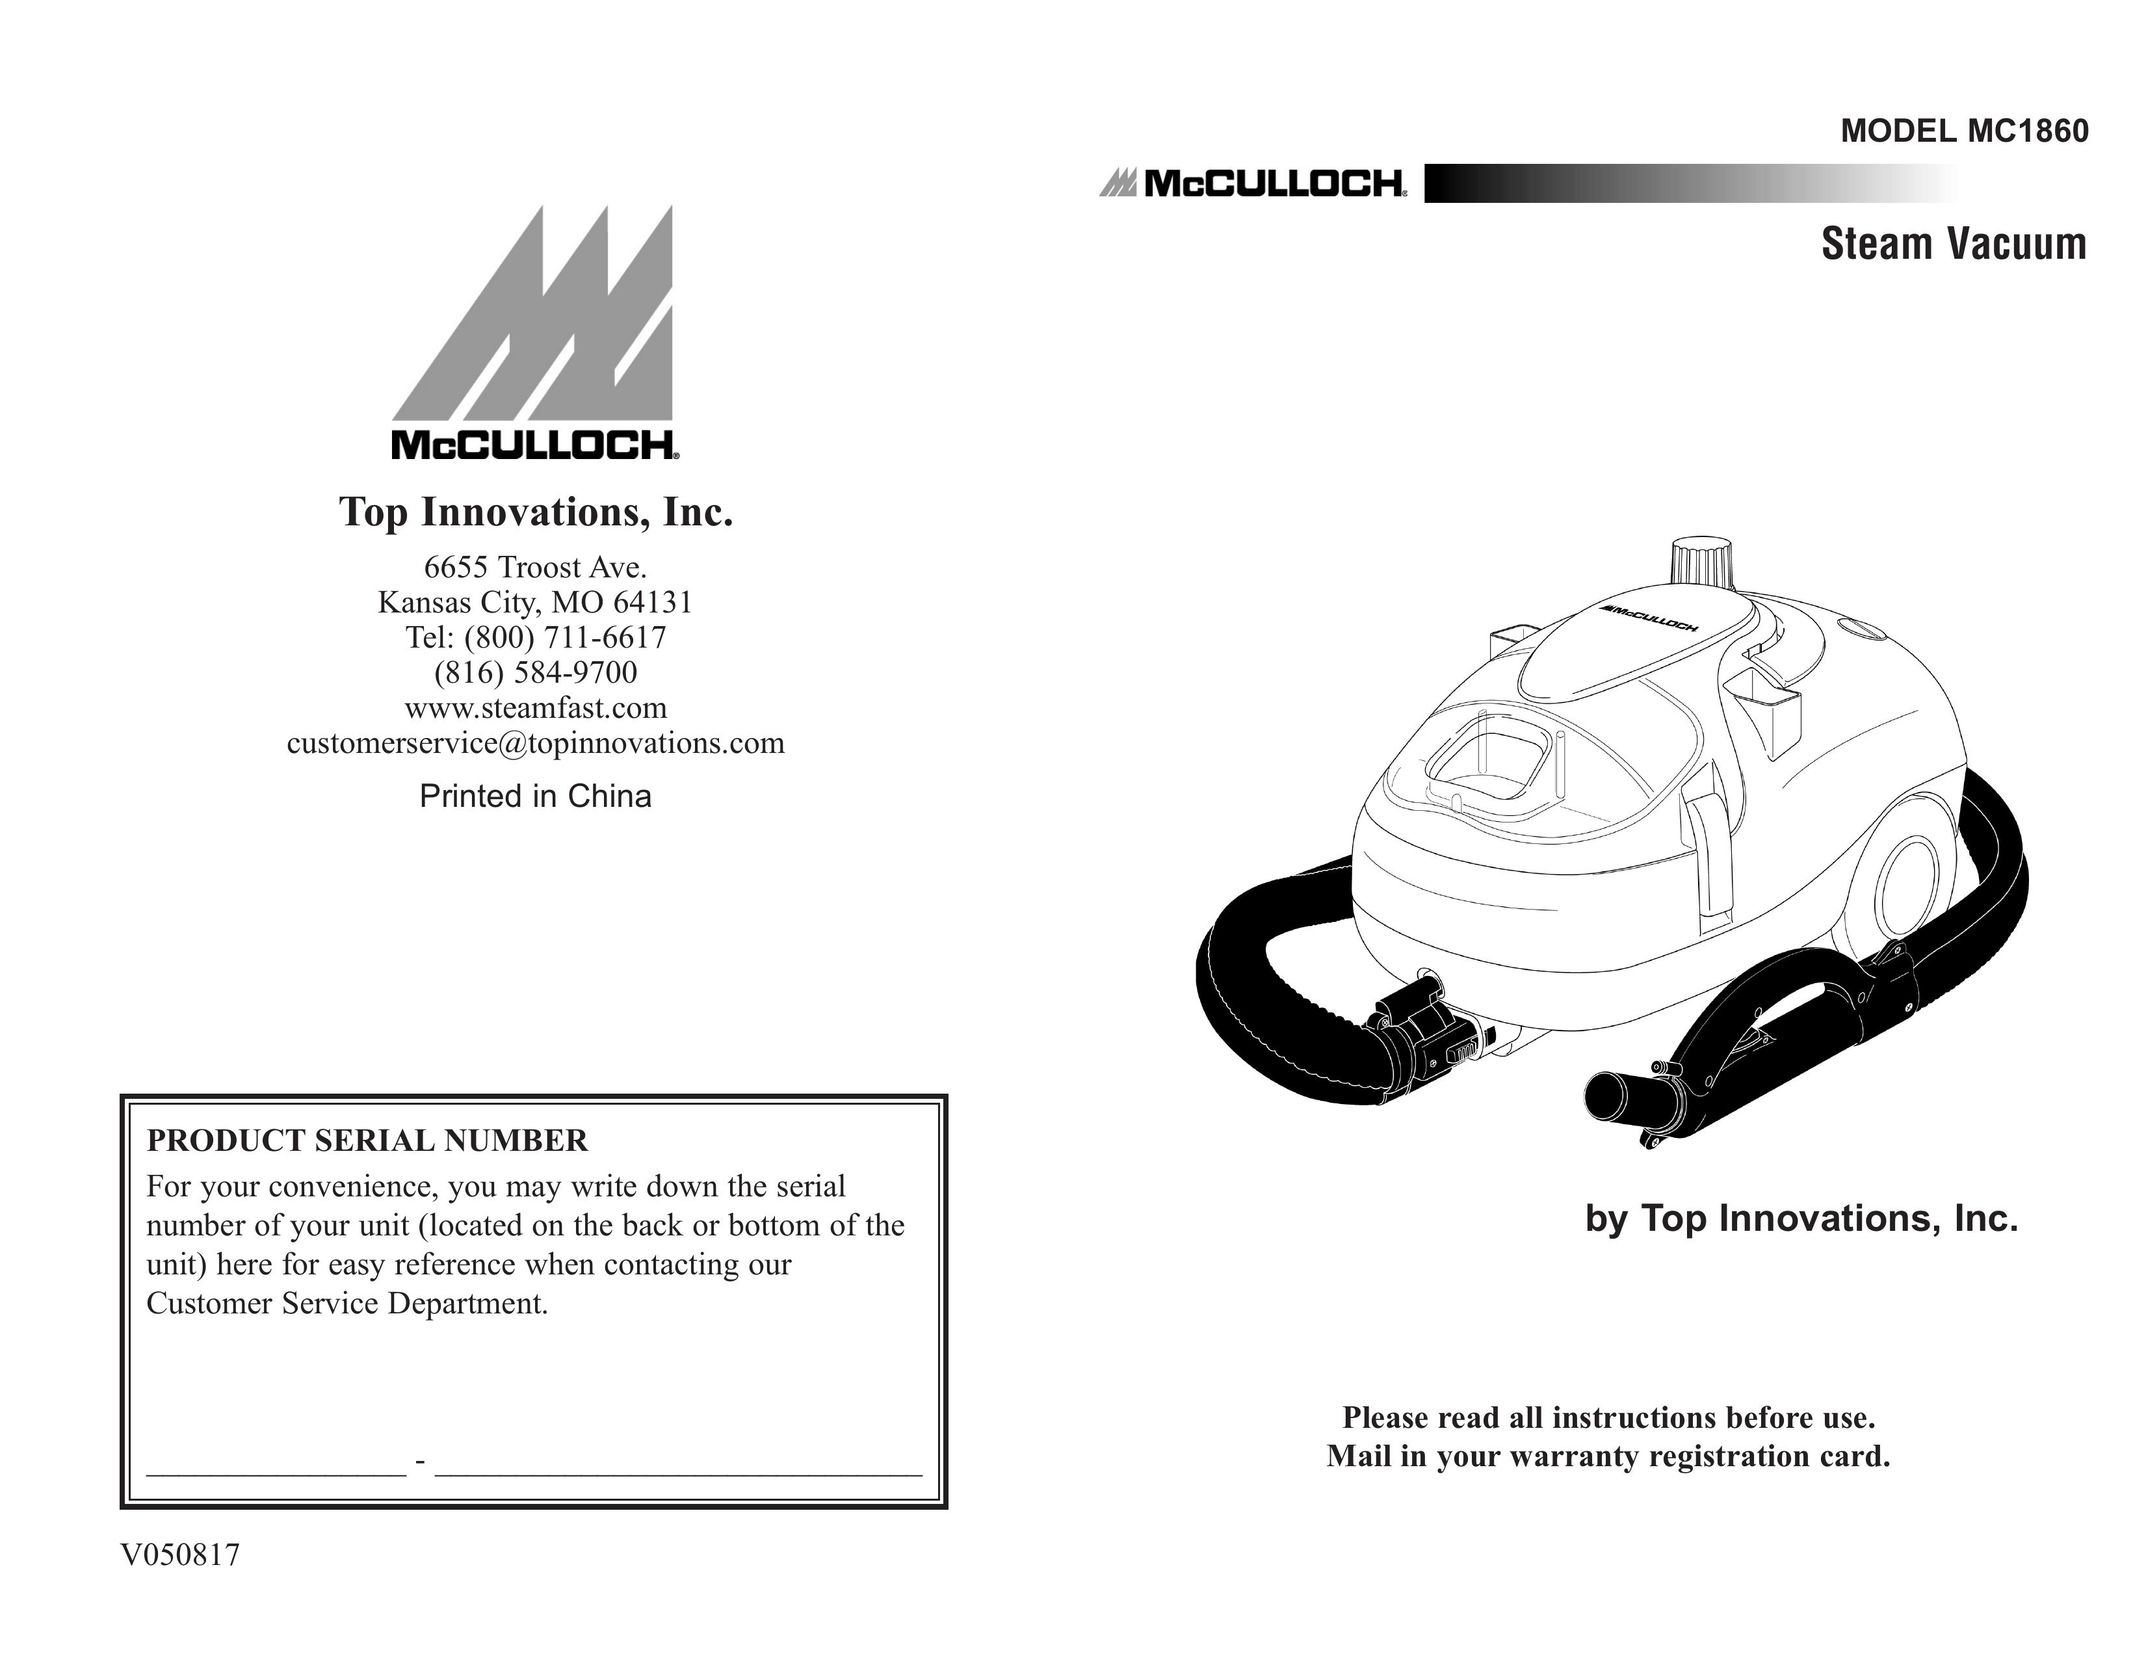 Top Innovations MODEL MC1860 Vacuum Cleaner User Manual